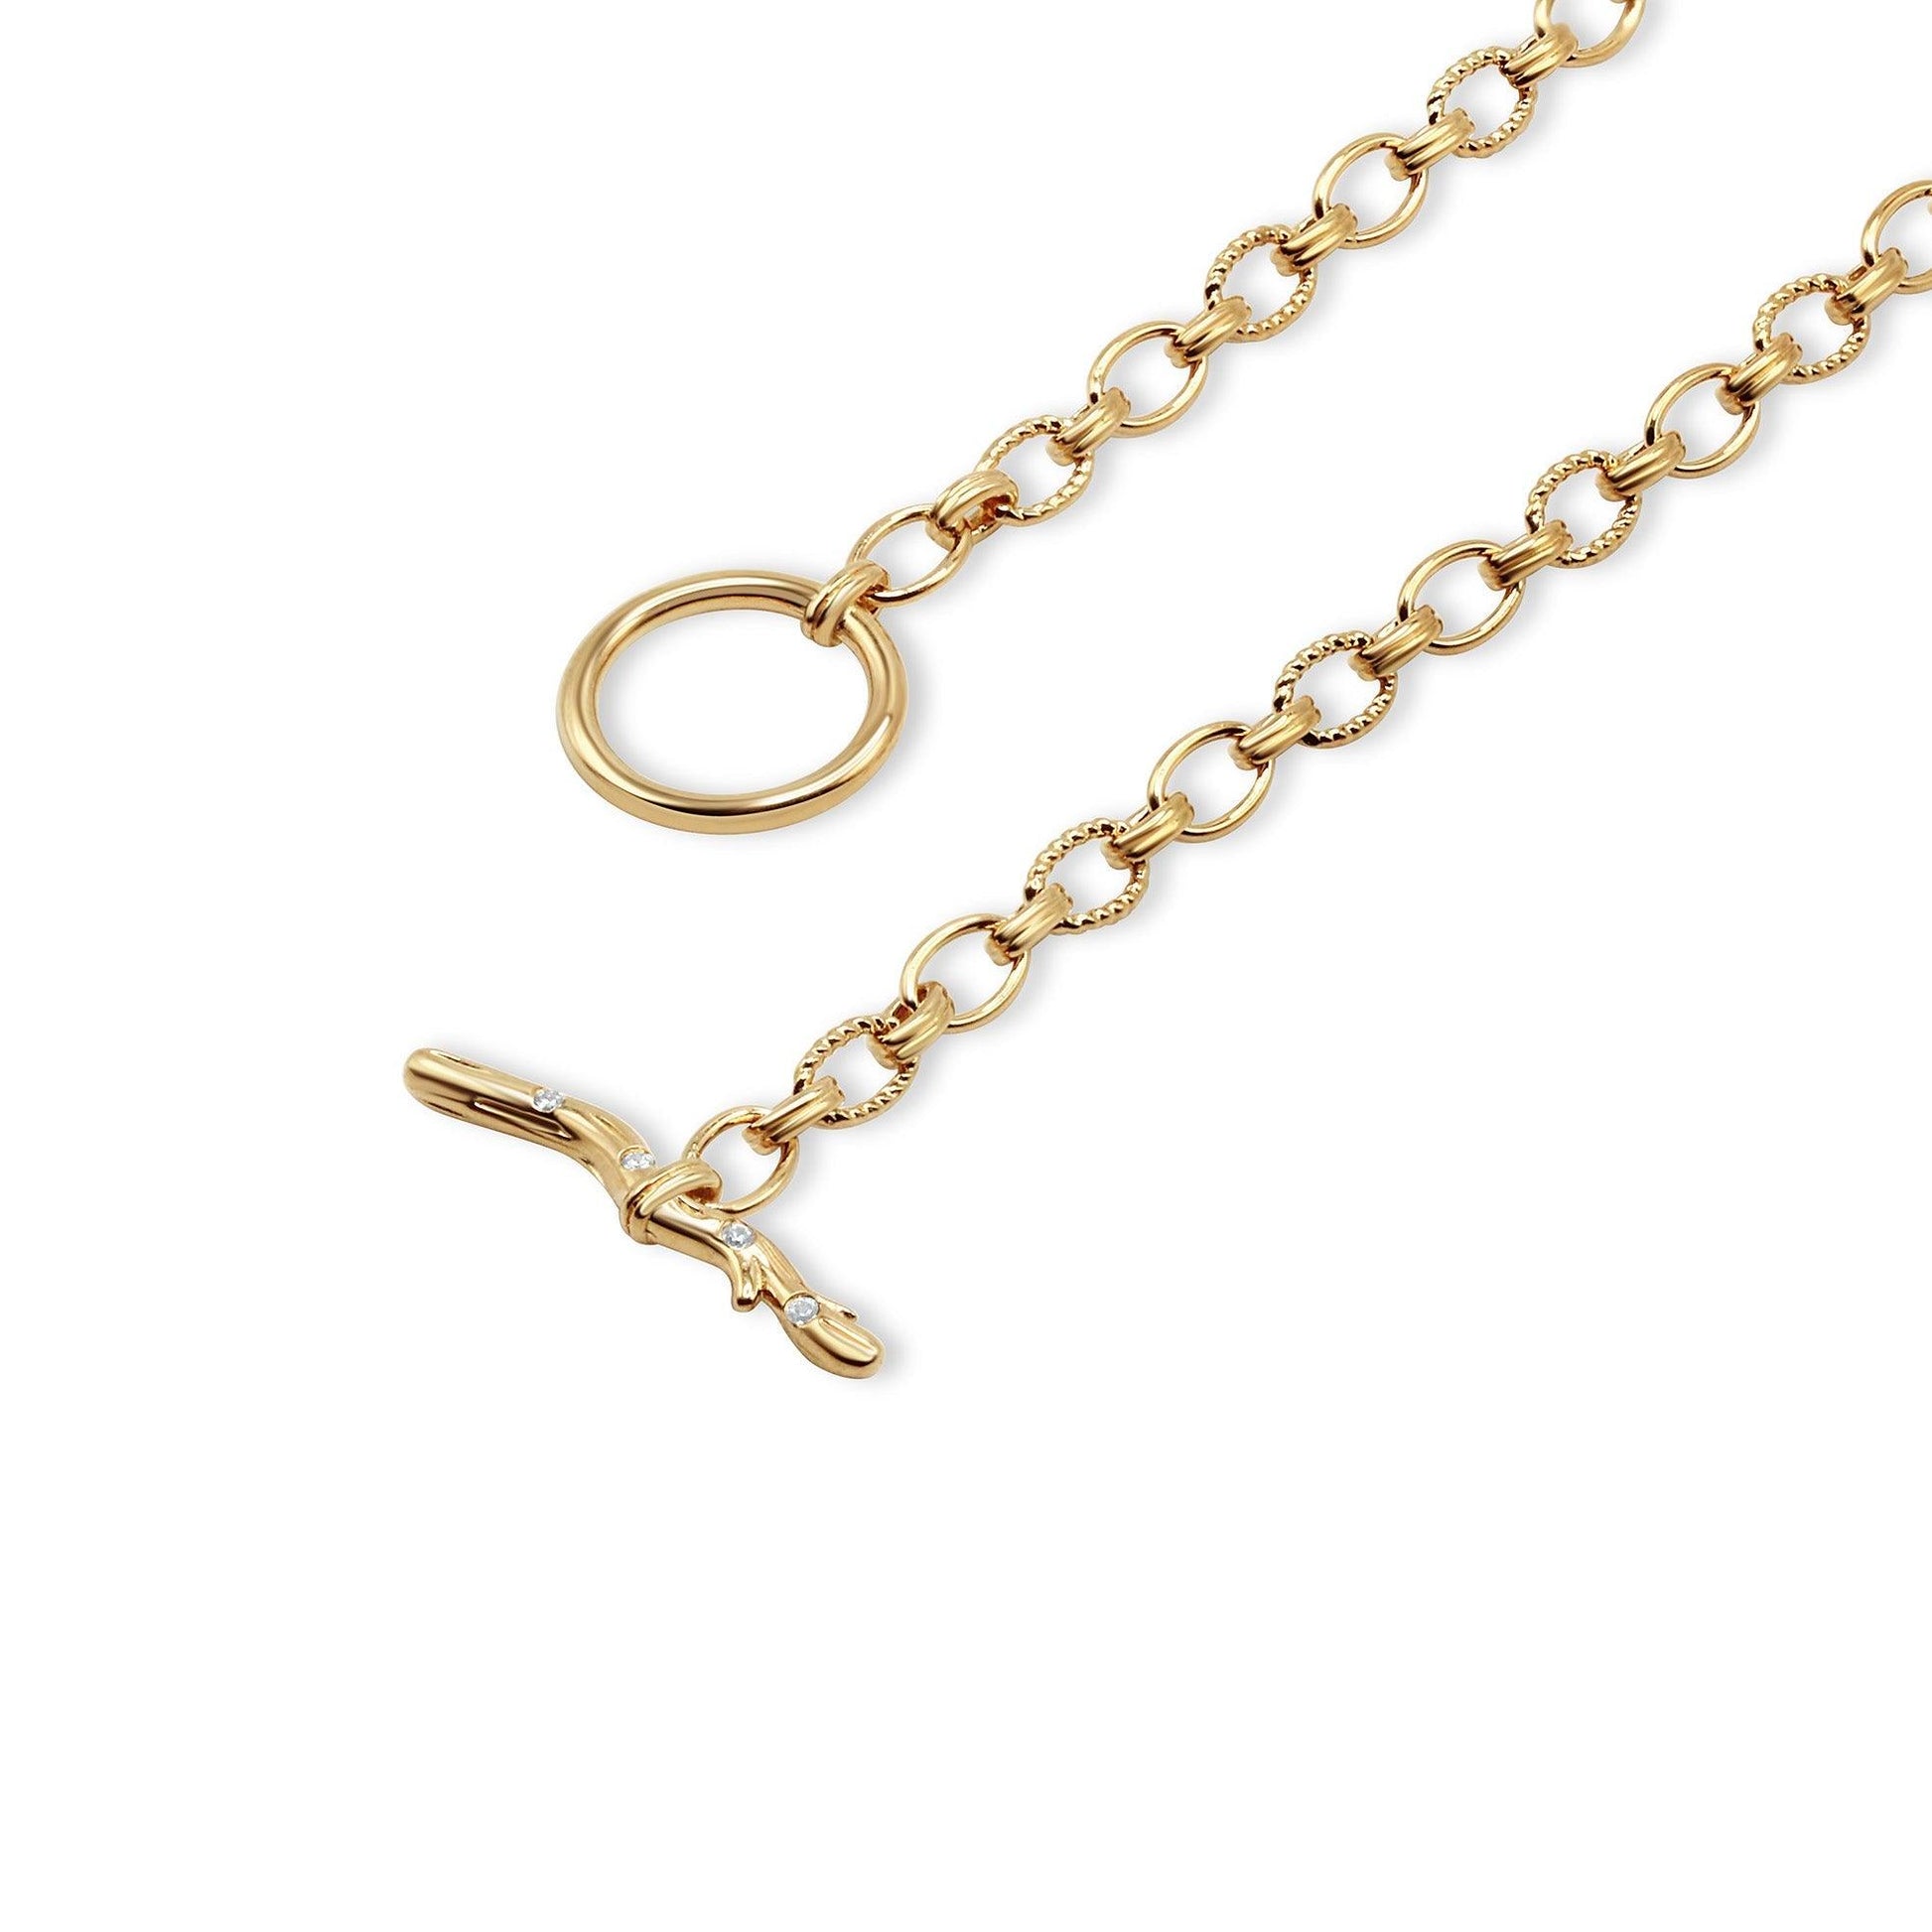 Quercus Alba Toggle Chain Necklace - Ptera Jewelry